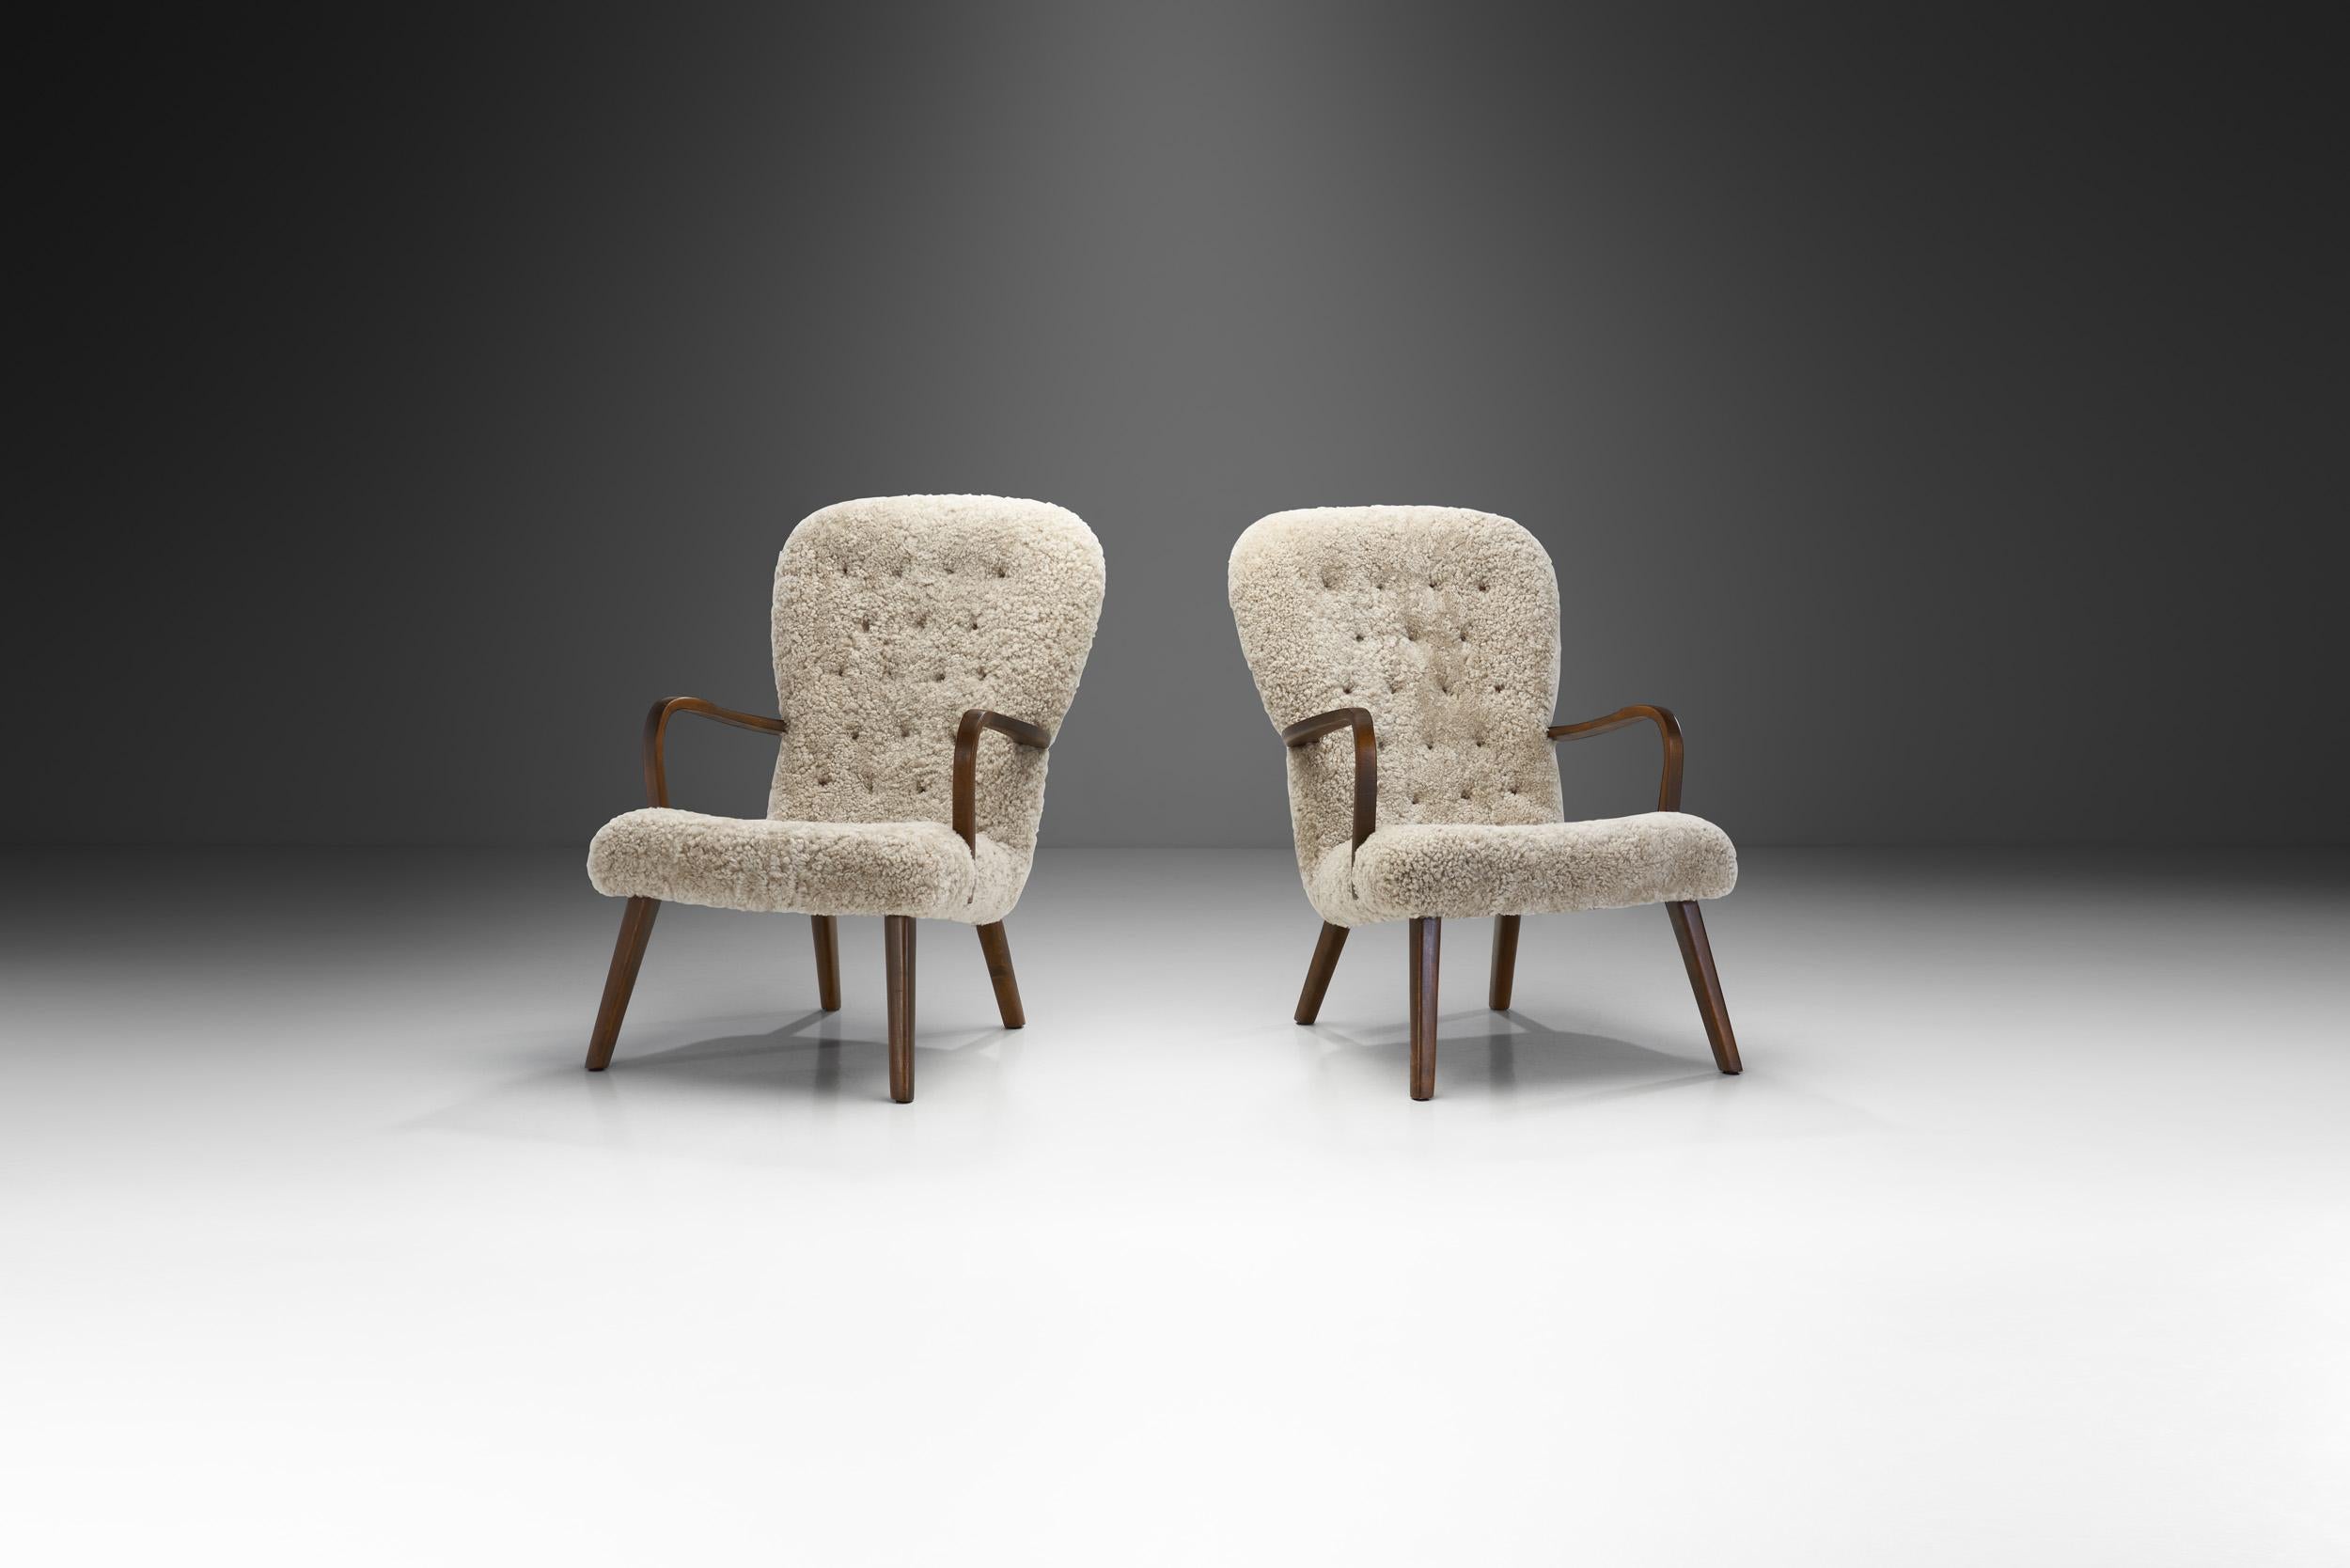 Scandinavian Modern Stained Beech Easy Chairs in Sheepskin by a Danish Cabinetmaker, Denmark 1940s For Sale